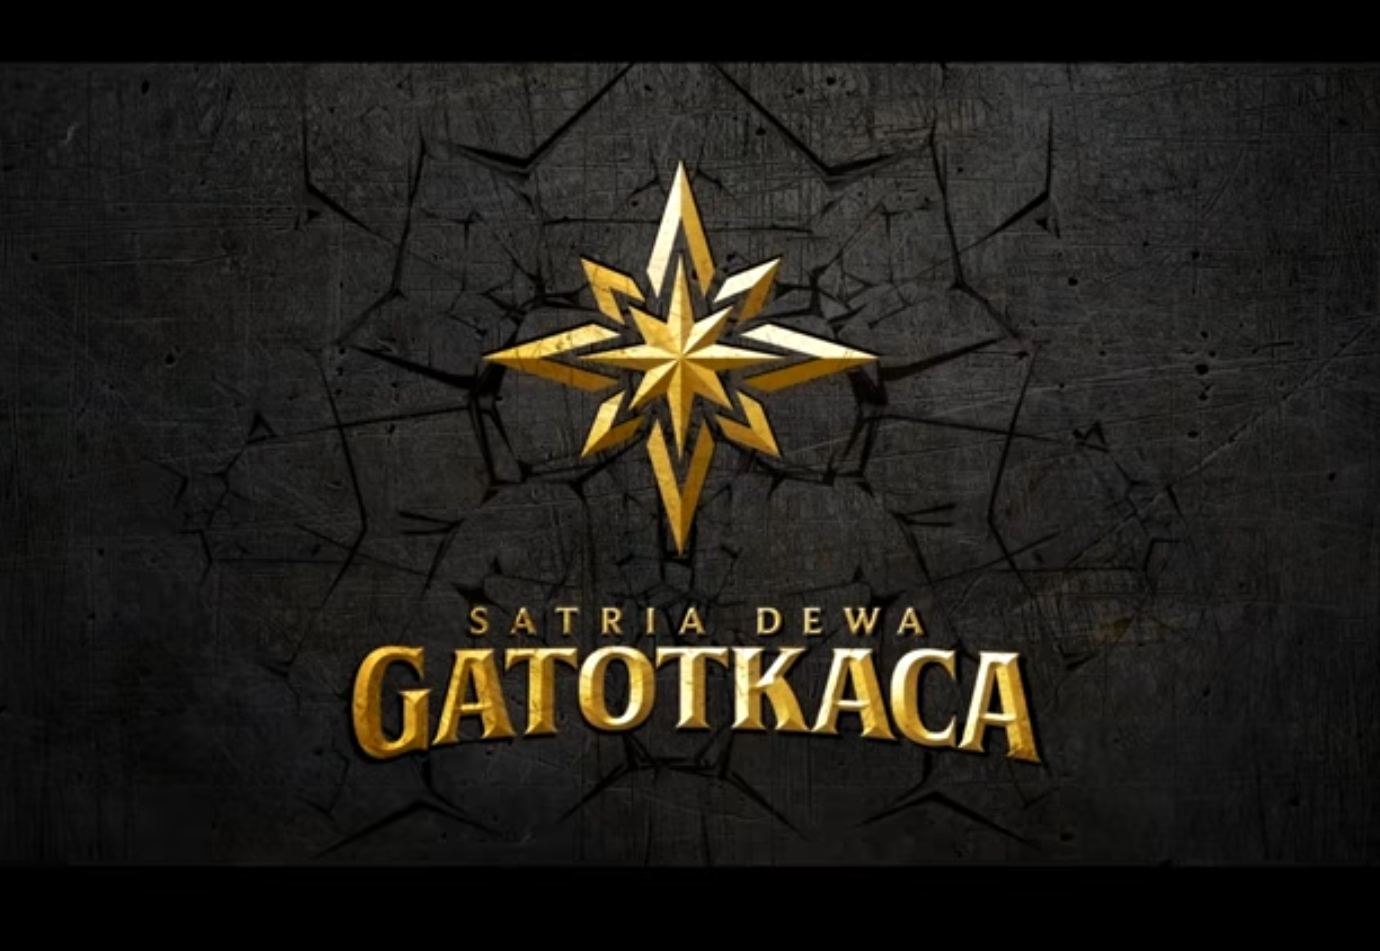 Gambar logo dan tulisan Satria Dewa Gatotkaca.